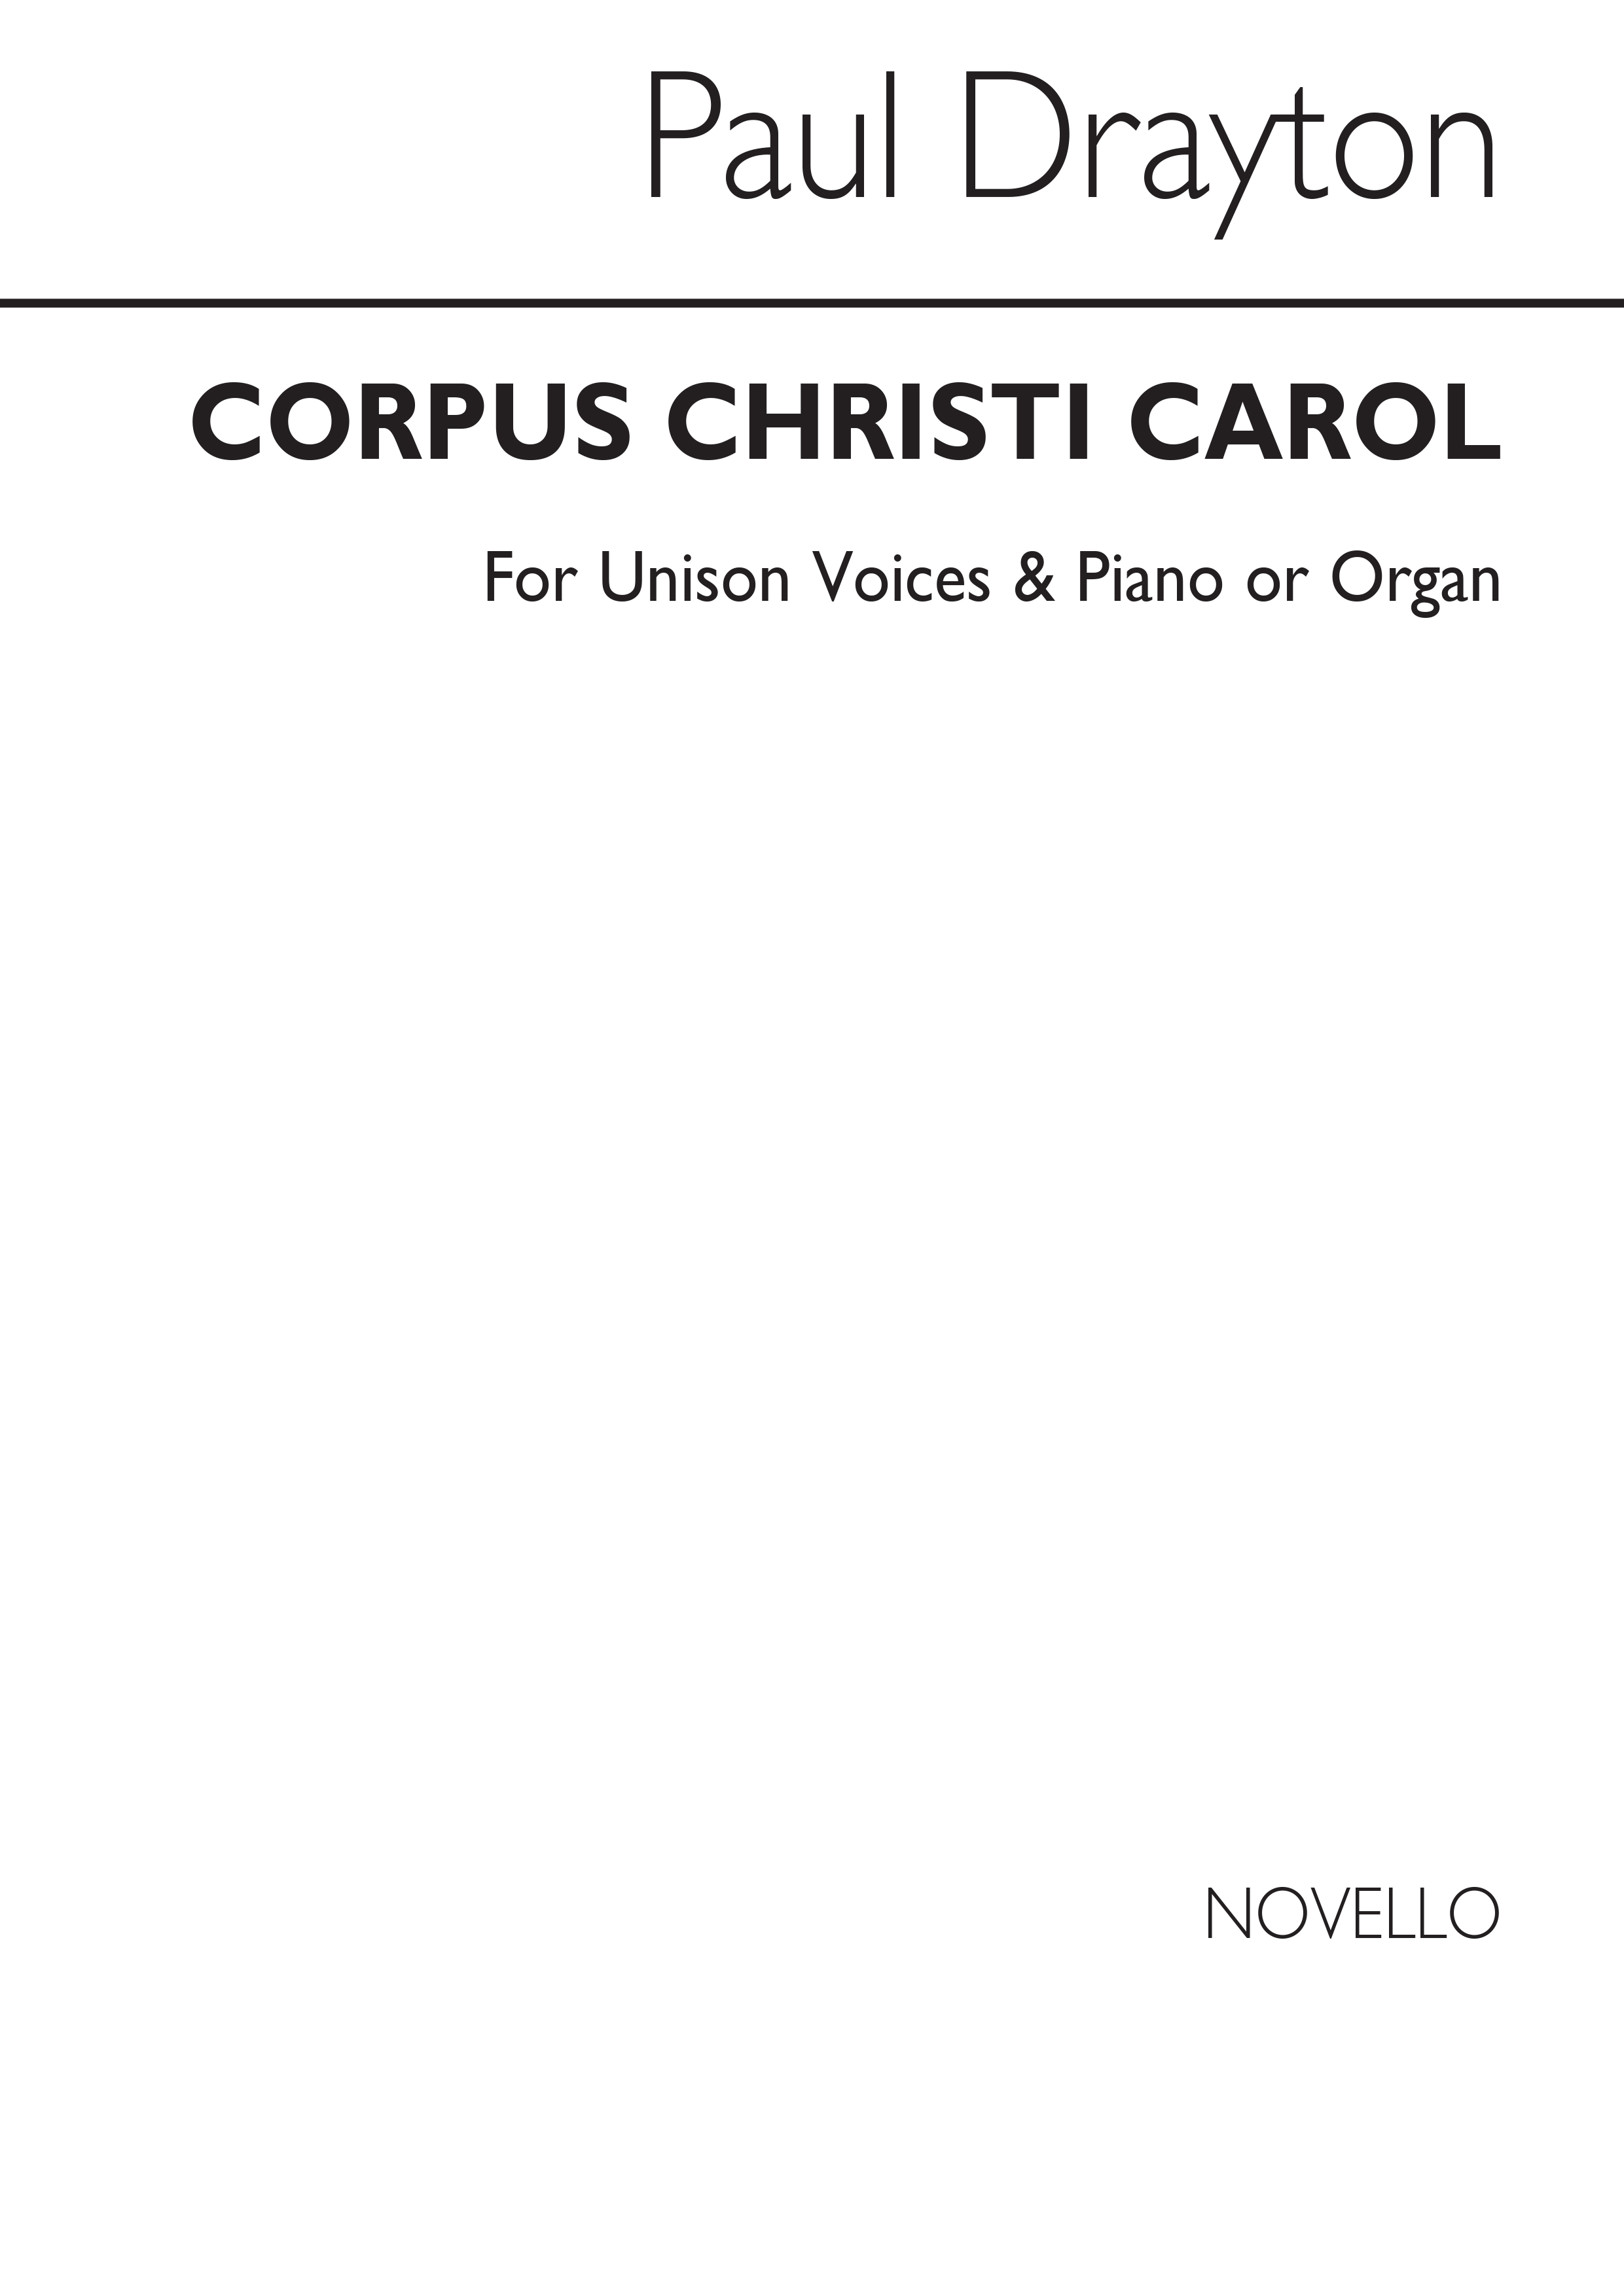 Paul Drayton: Corpus Christi Carol